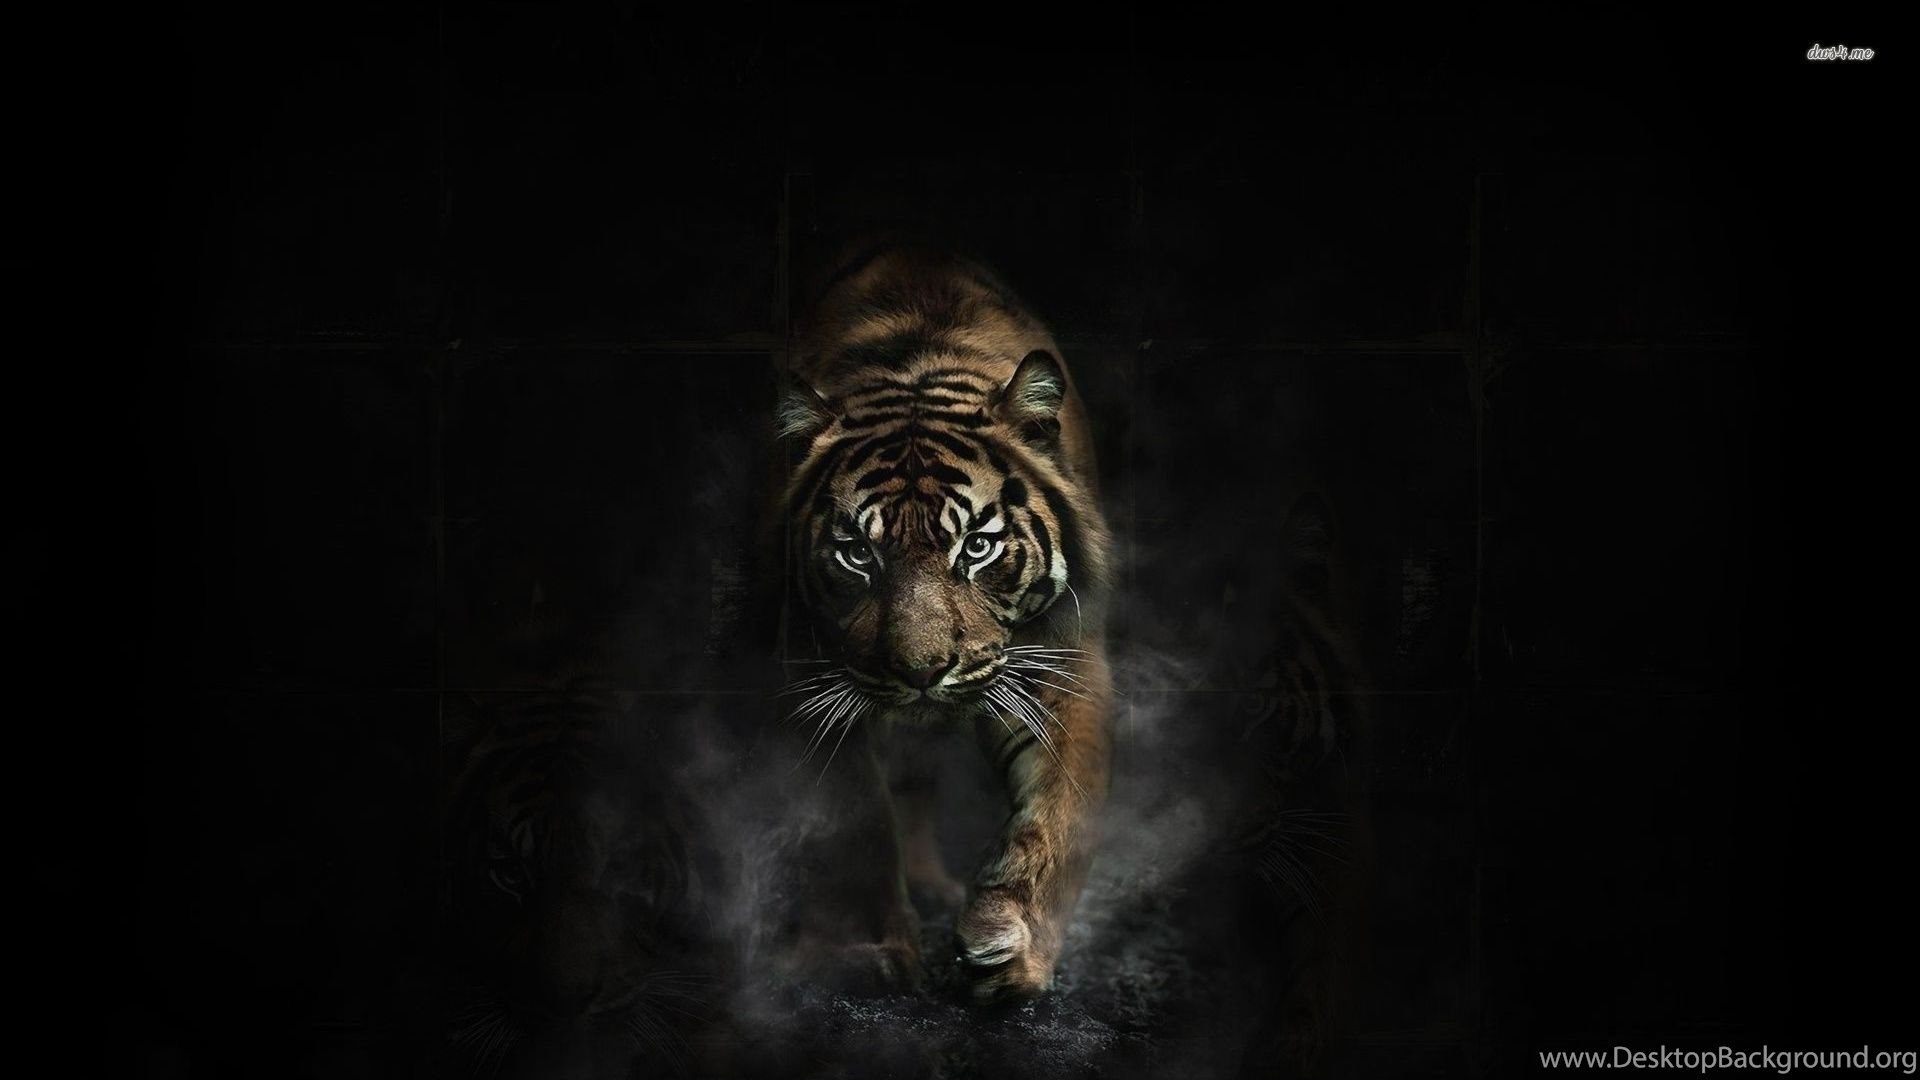 Tiger In The Shadows Wallpaper Digital Art Wallpaper Desktop Background